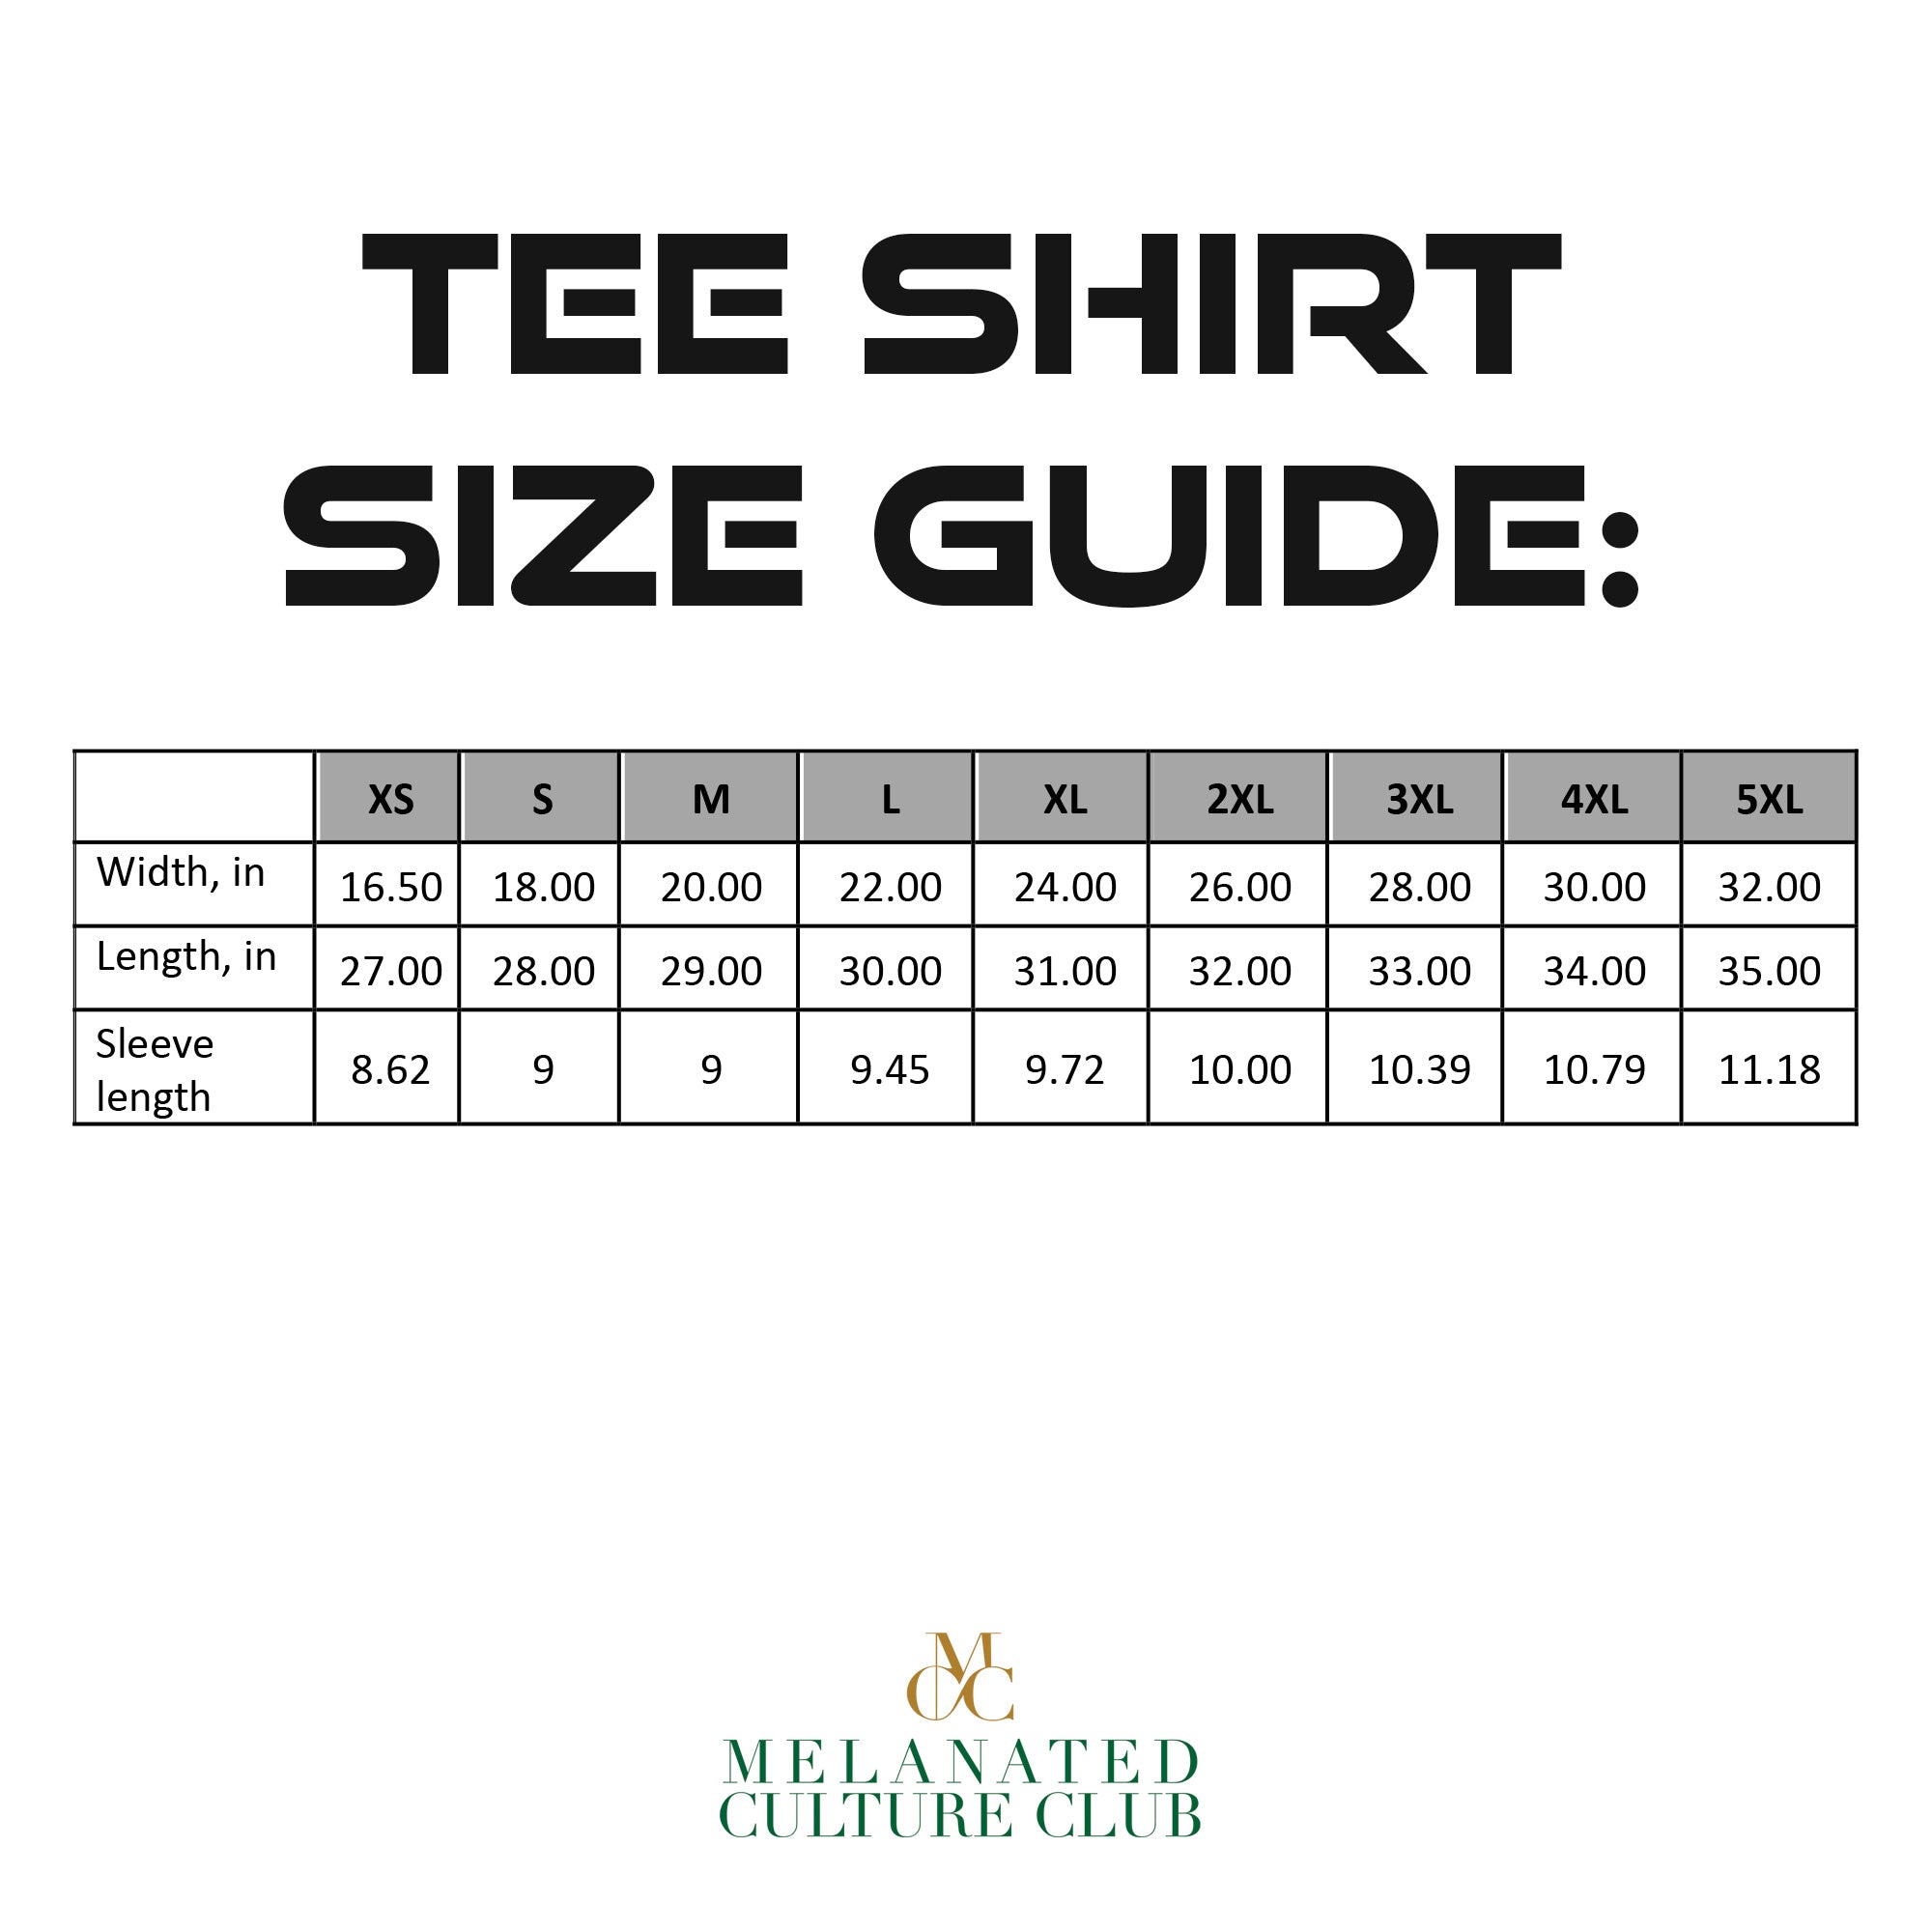 Tee shirt size guide